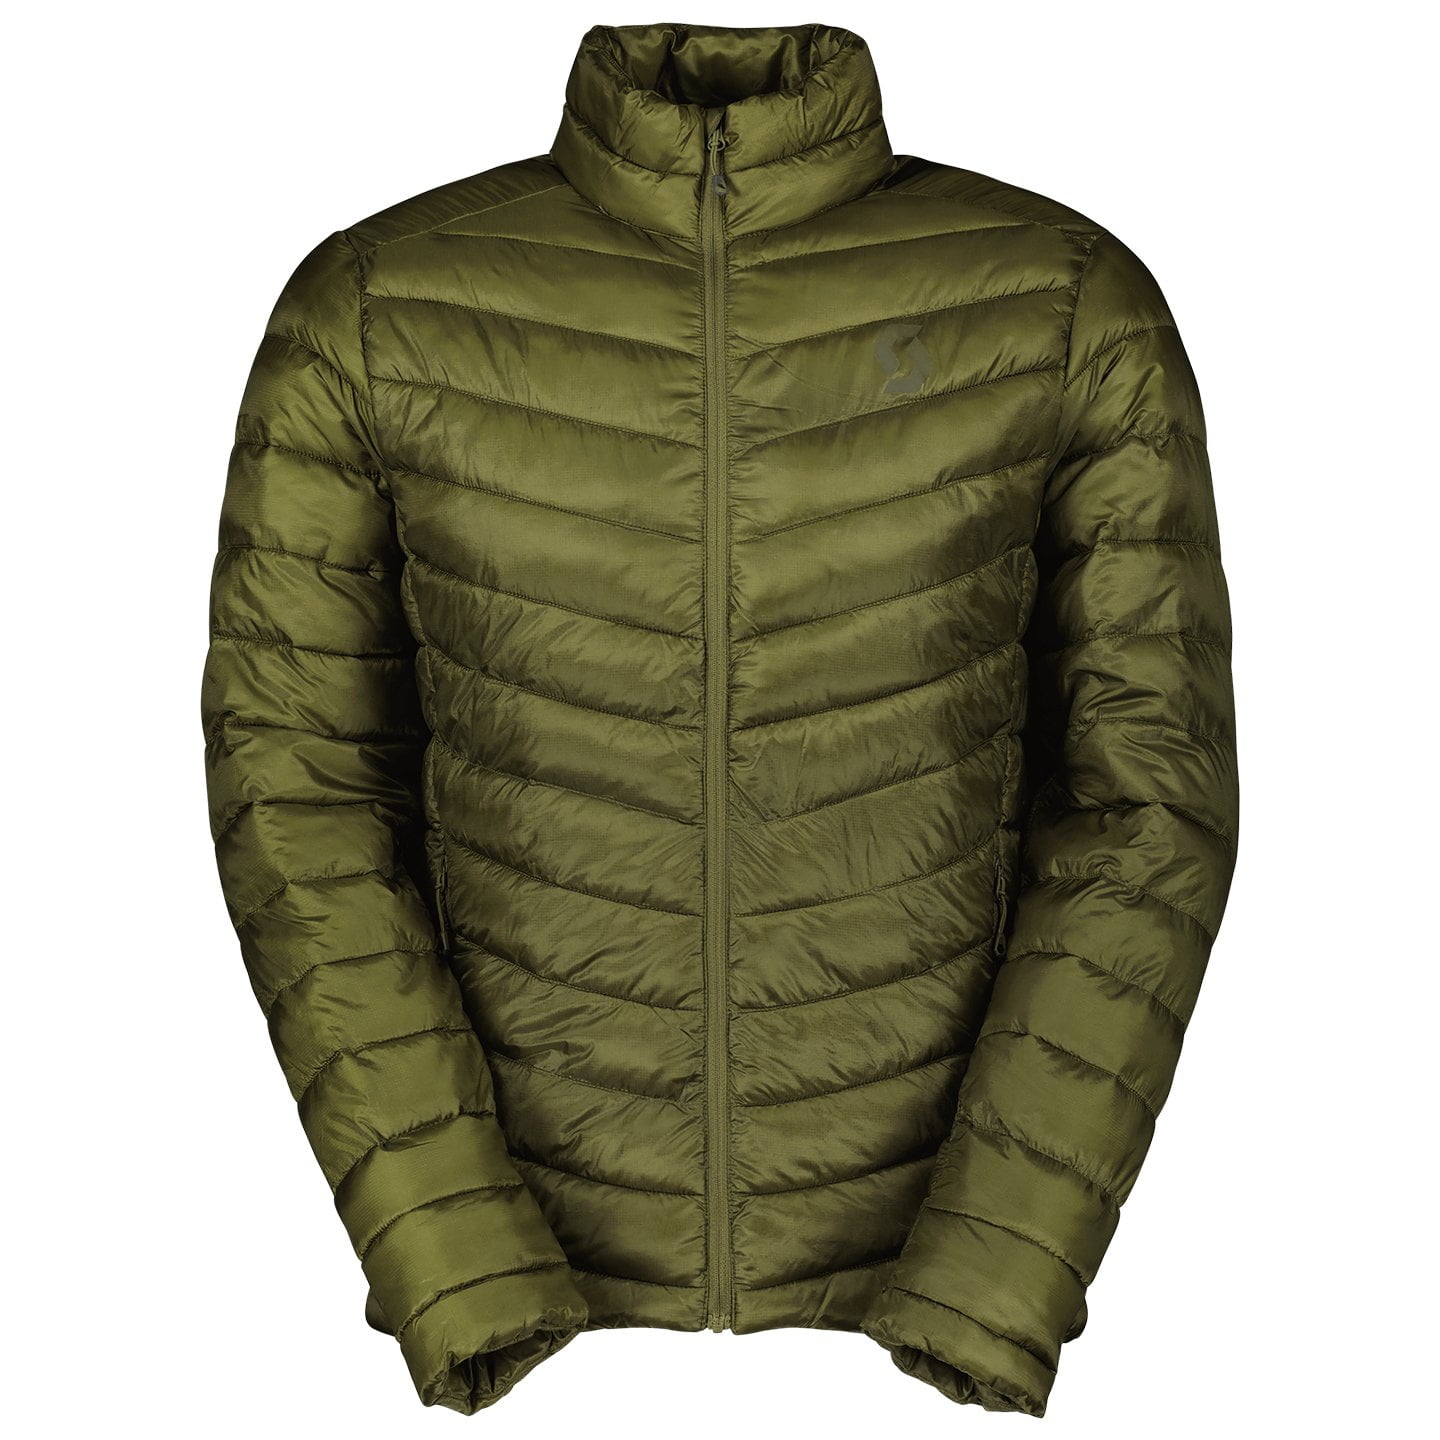 SCOTT Winter Jacket Insuloft Tech PL Thermal Jacket, for men, size 2XL, Winter jacket, Cycling clothing